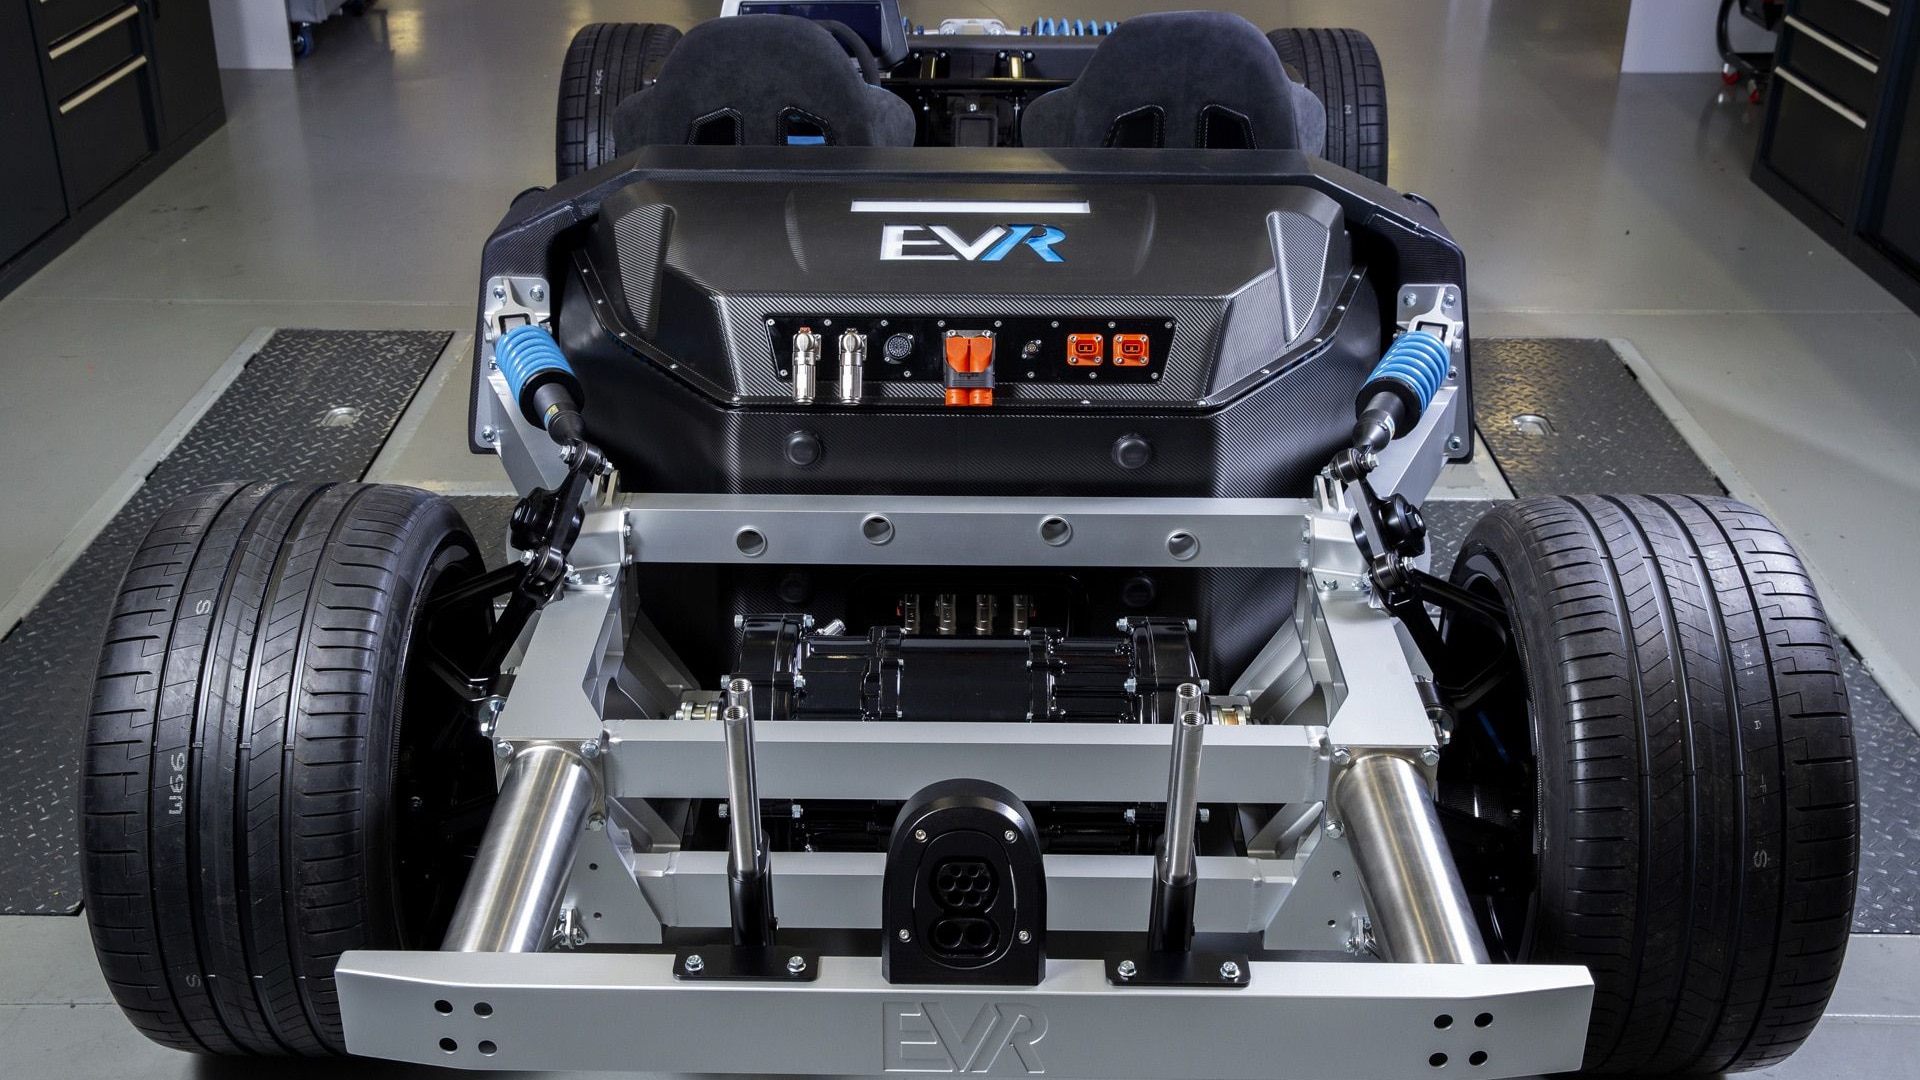 Williams Advanced Engineering EVR modular electric vehicle platform